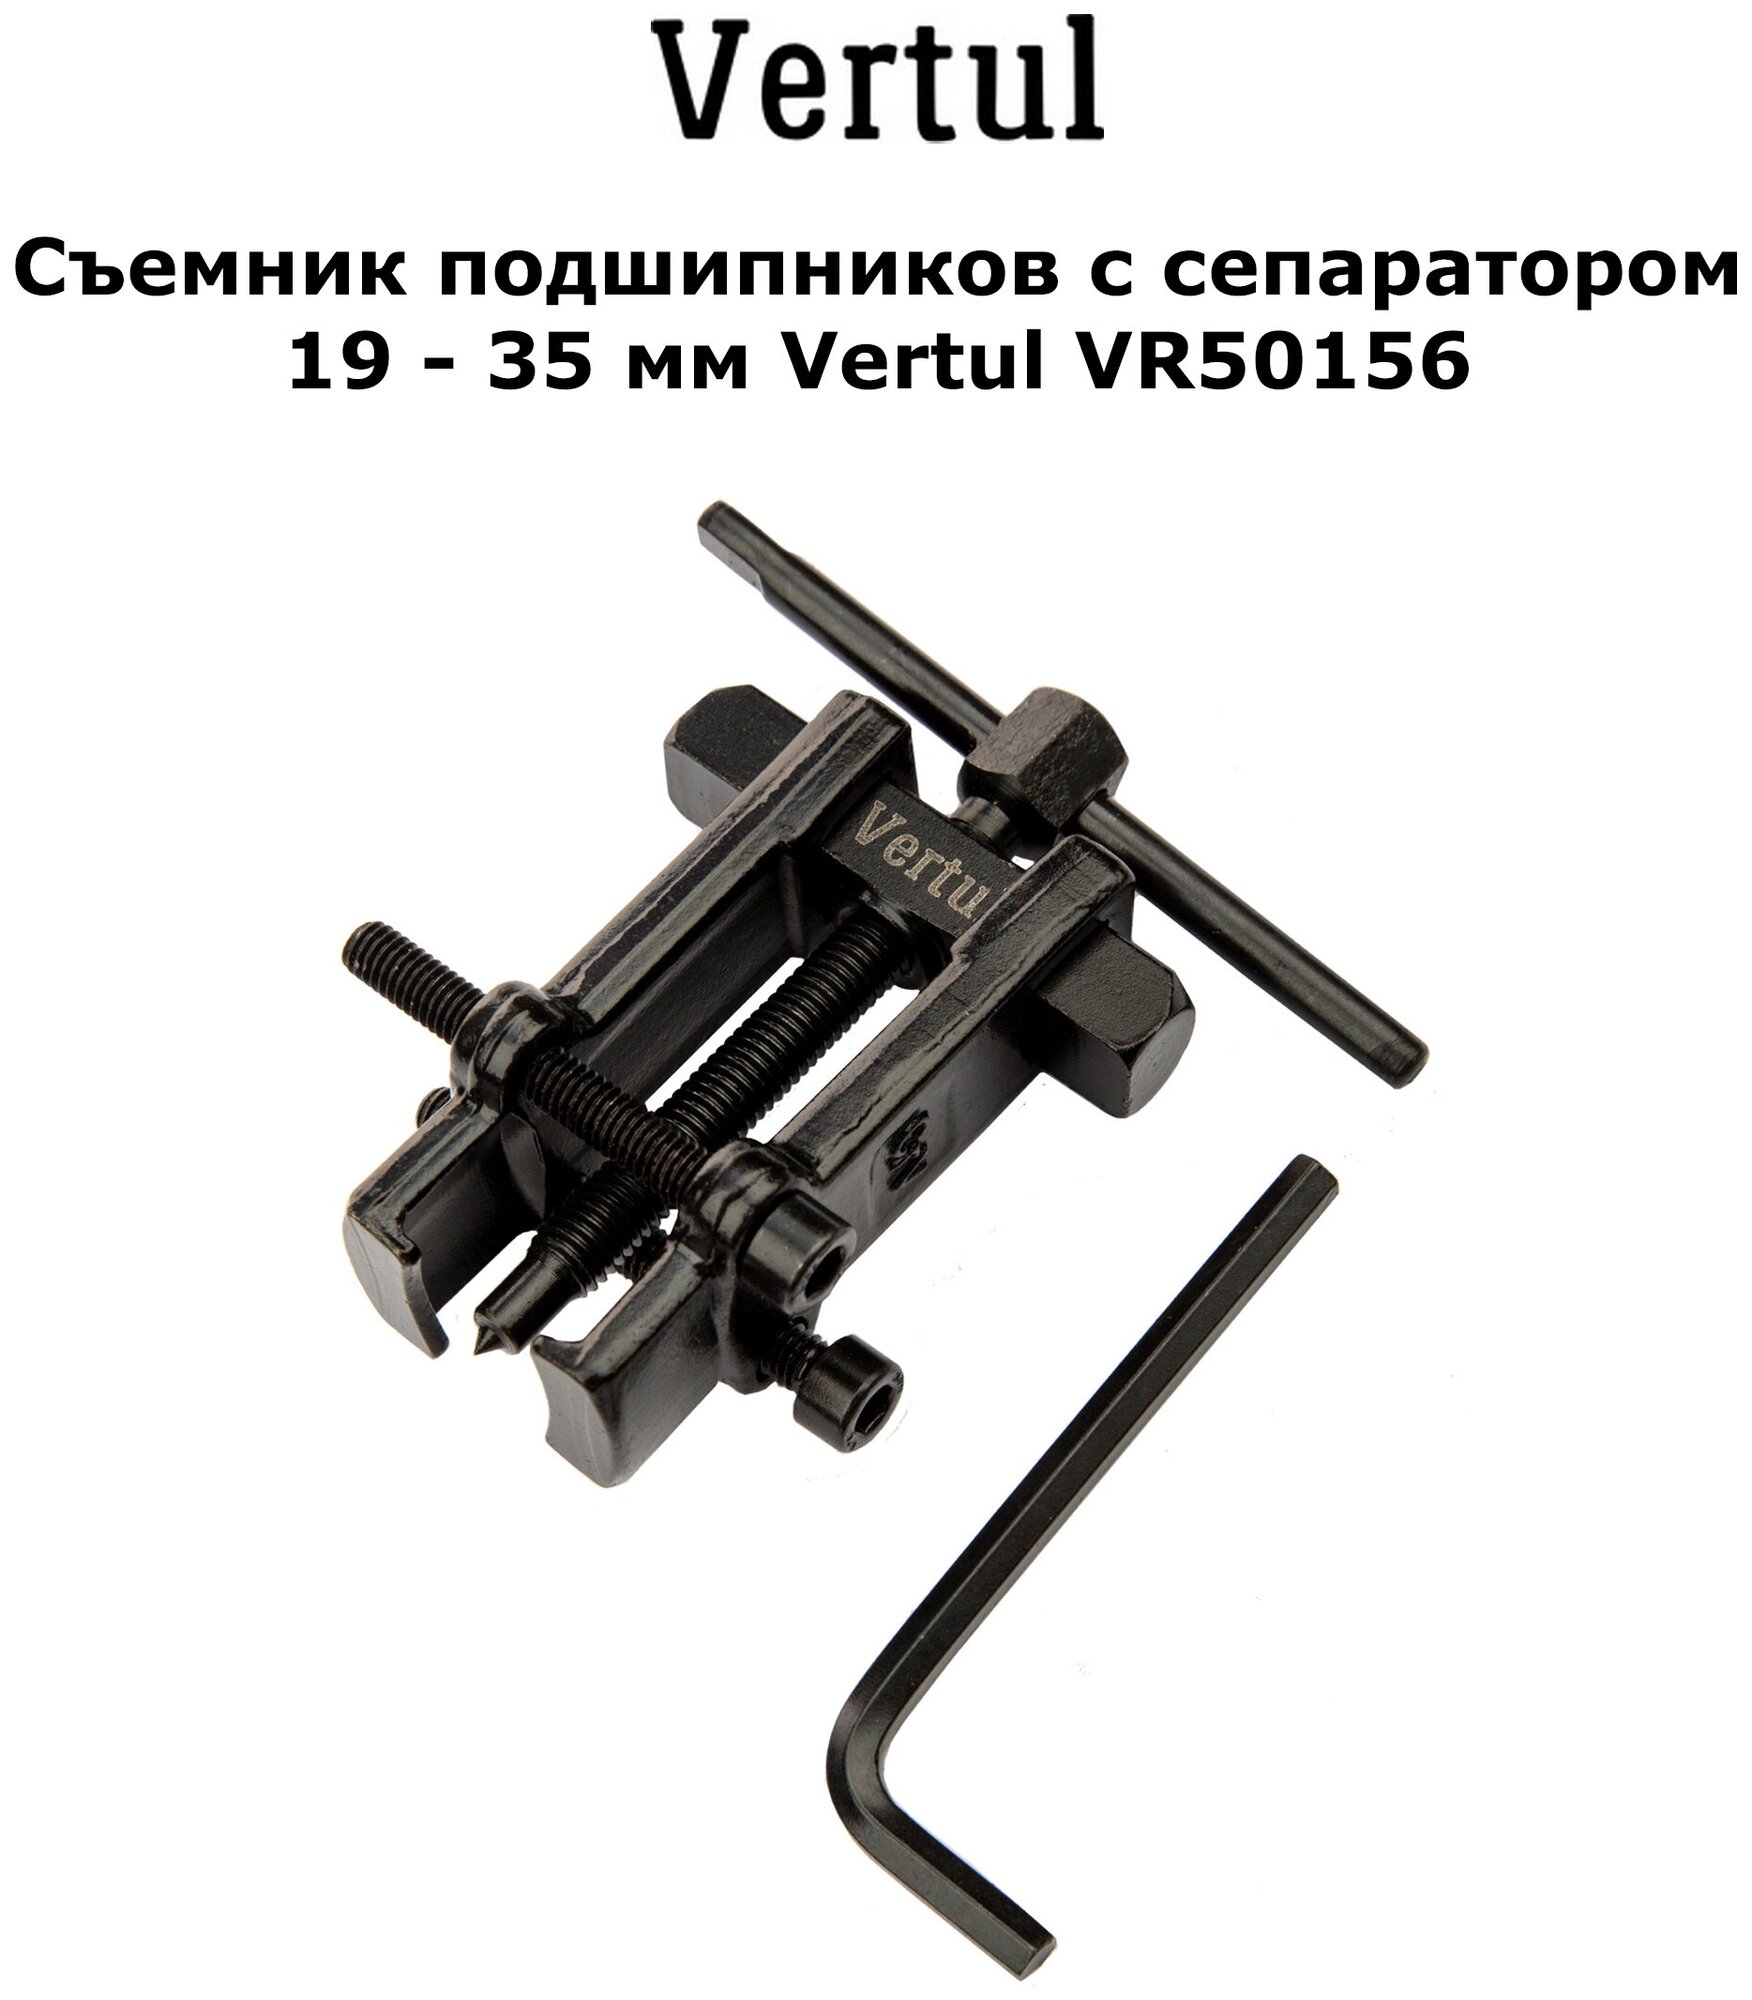 Съемник подшипников с сепаратором 19-35 мм Vertul VR50156